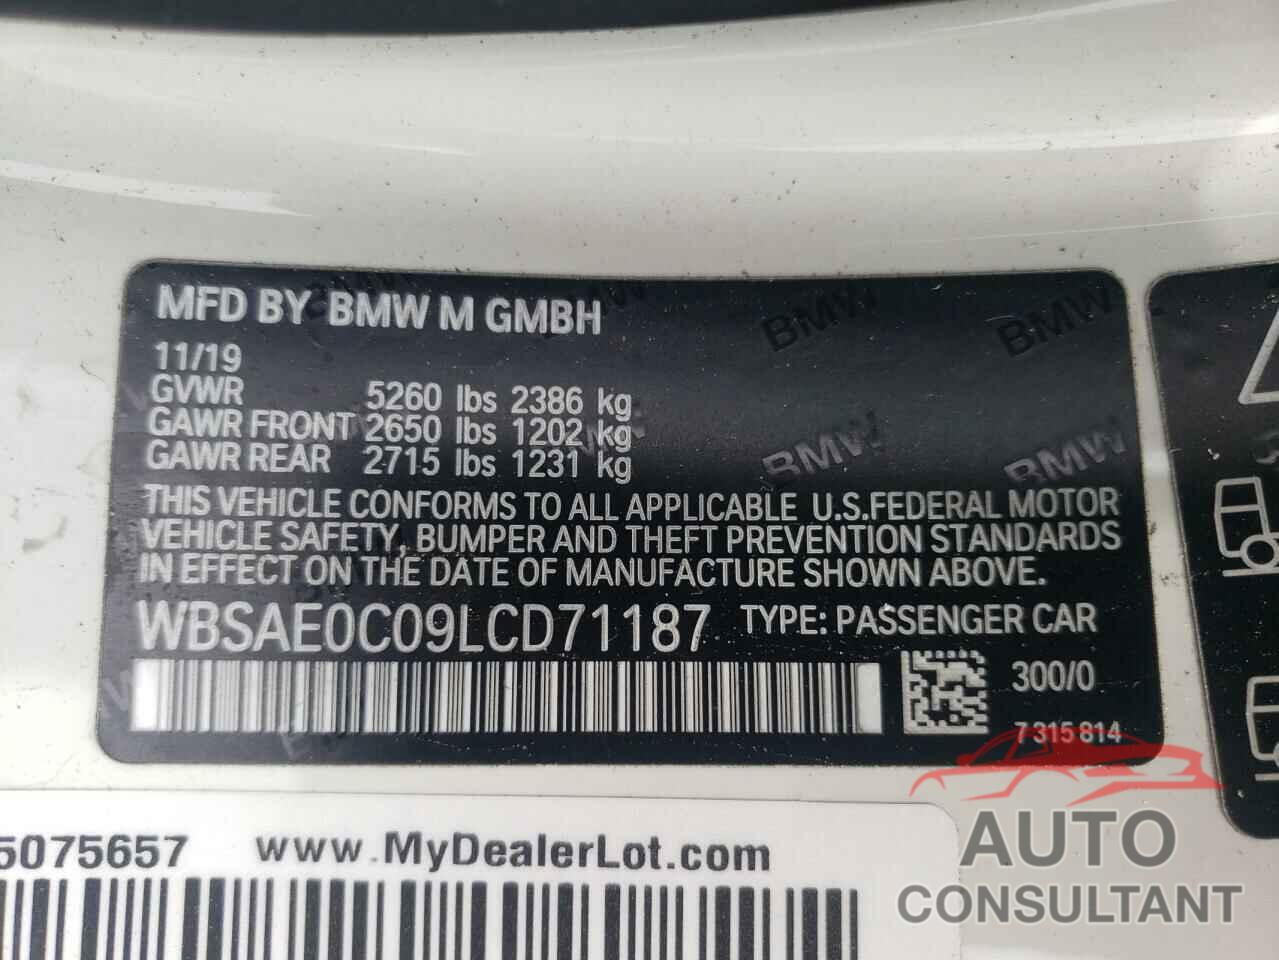 BMW M8 2020 - WBSAE0C09LCD71187